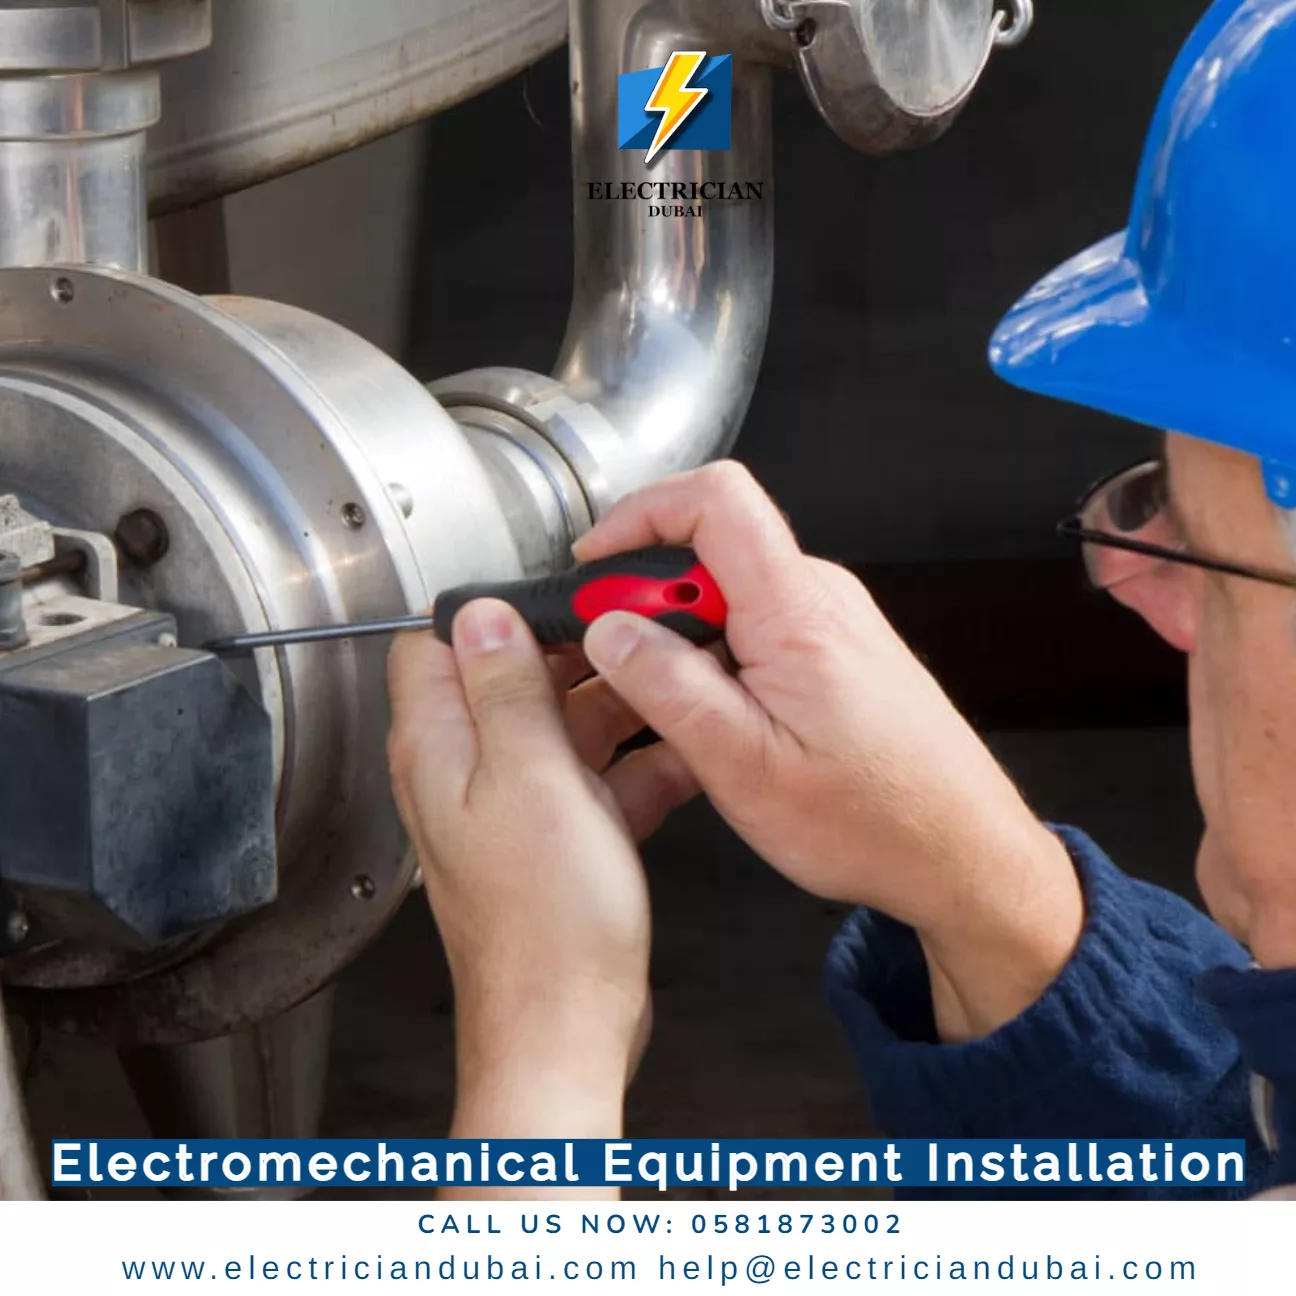 Electromechanical Equipment Installation